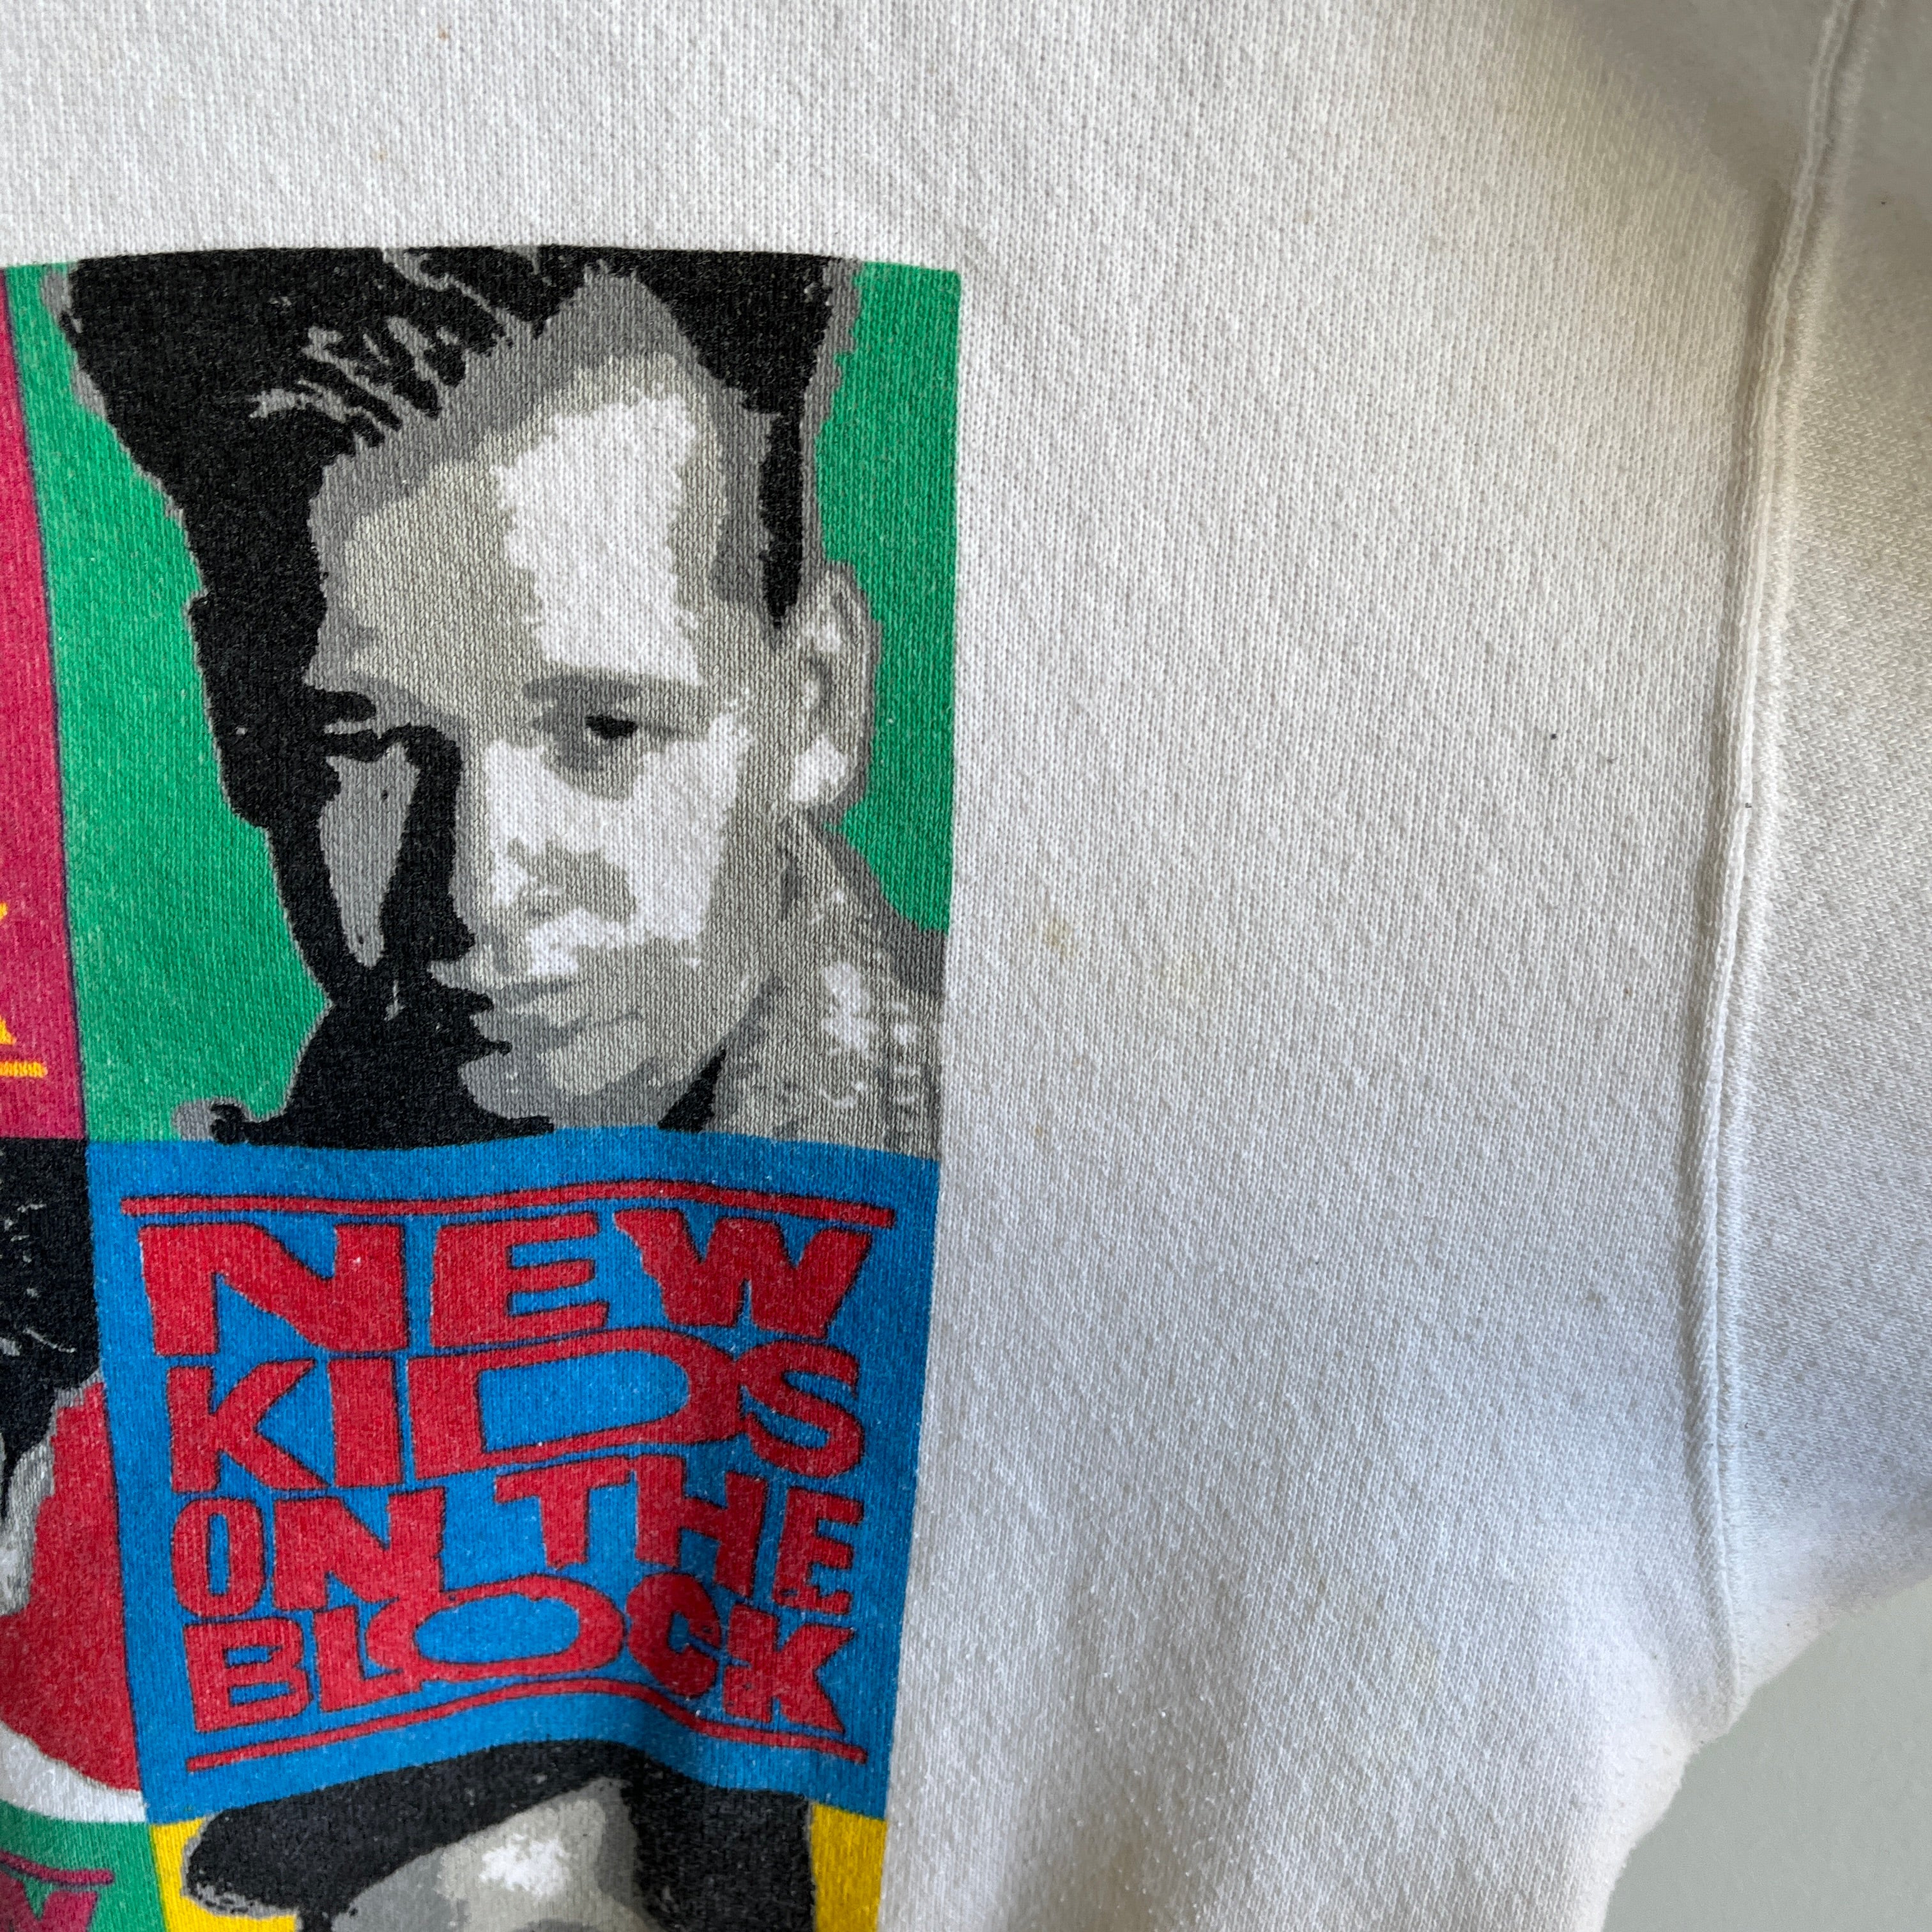 1990s New Kids on The Block Graphic Sweatshirt - OMFG!